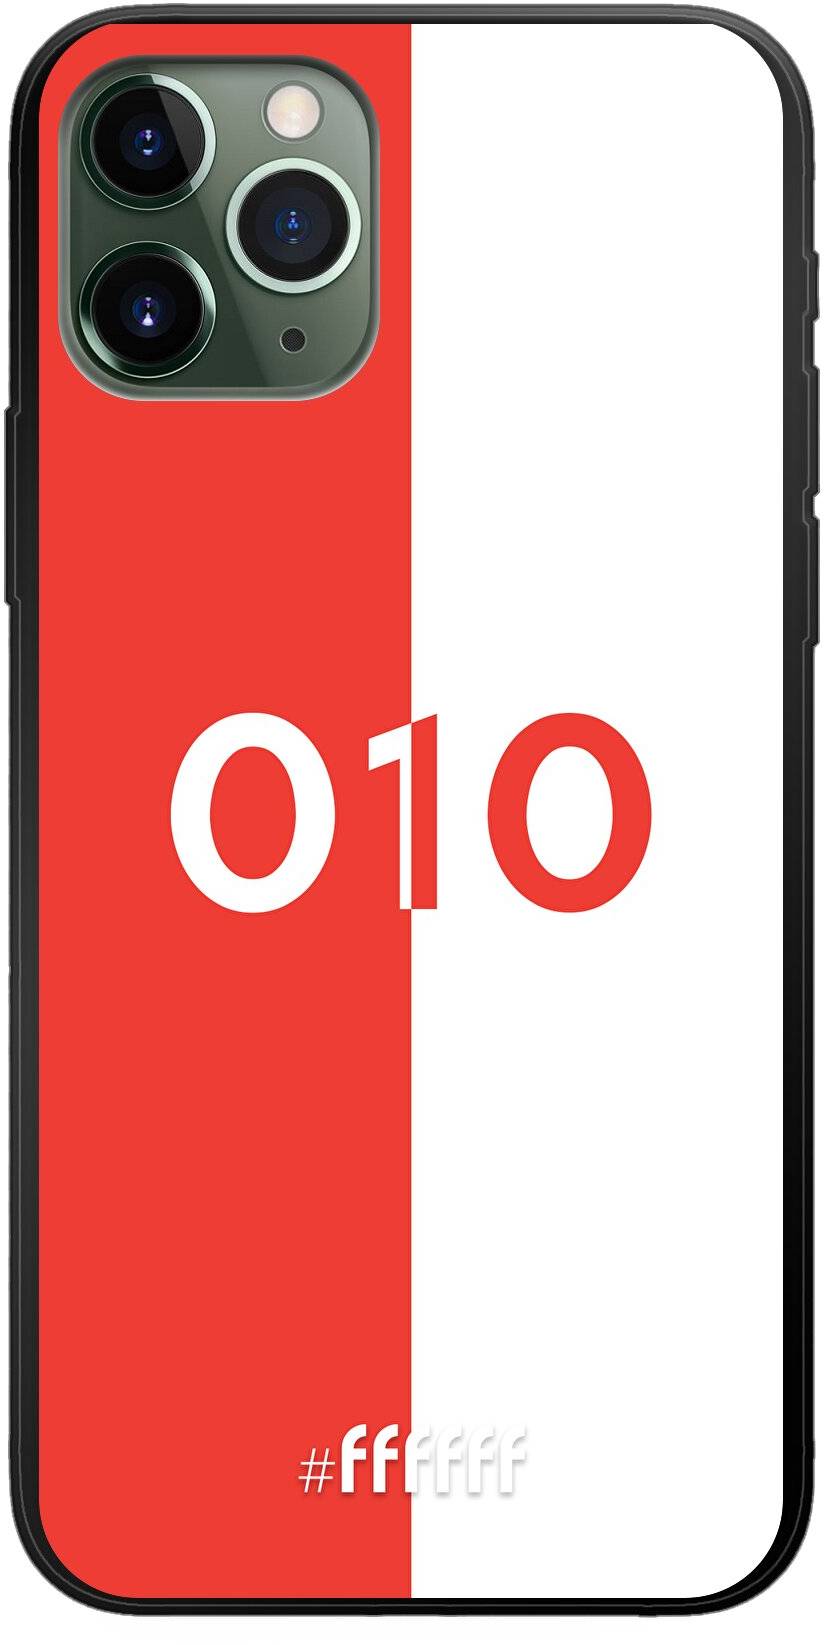 Feyenoord - 010 iPhone 11 Pro